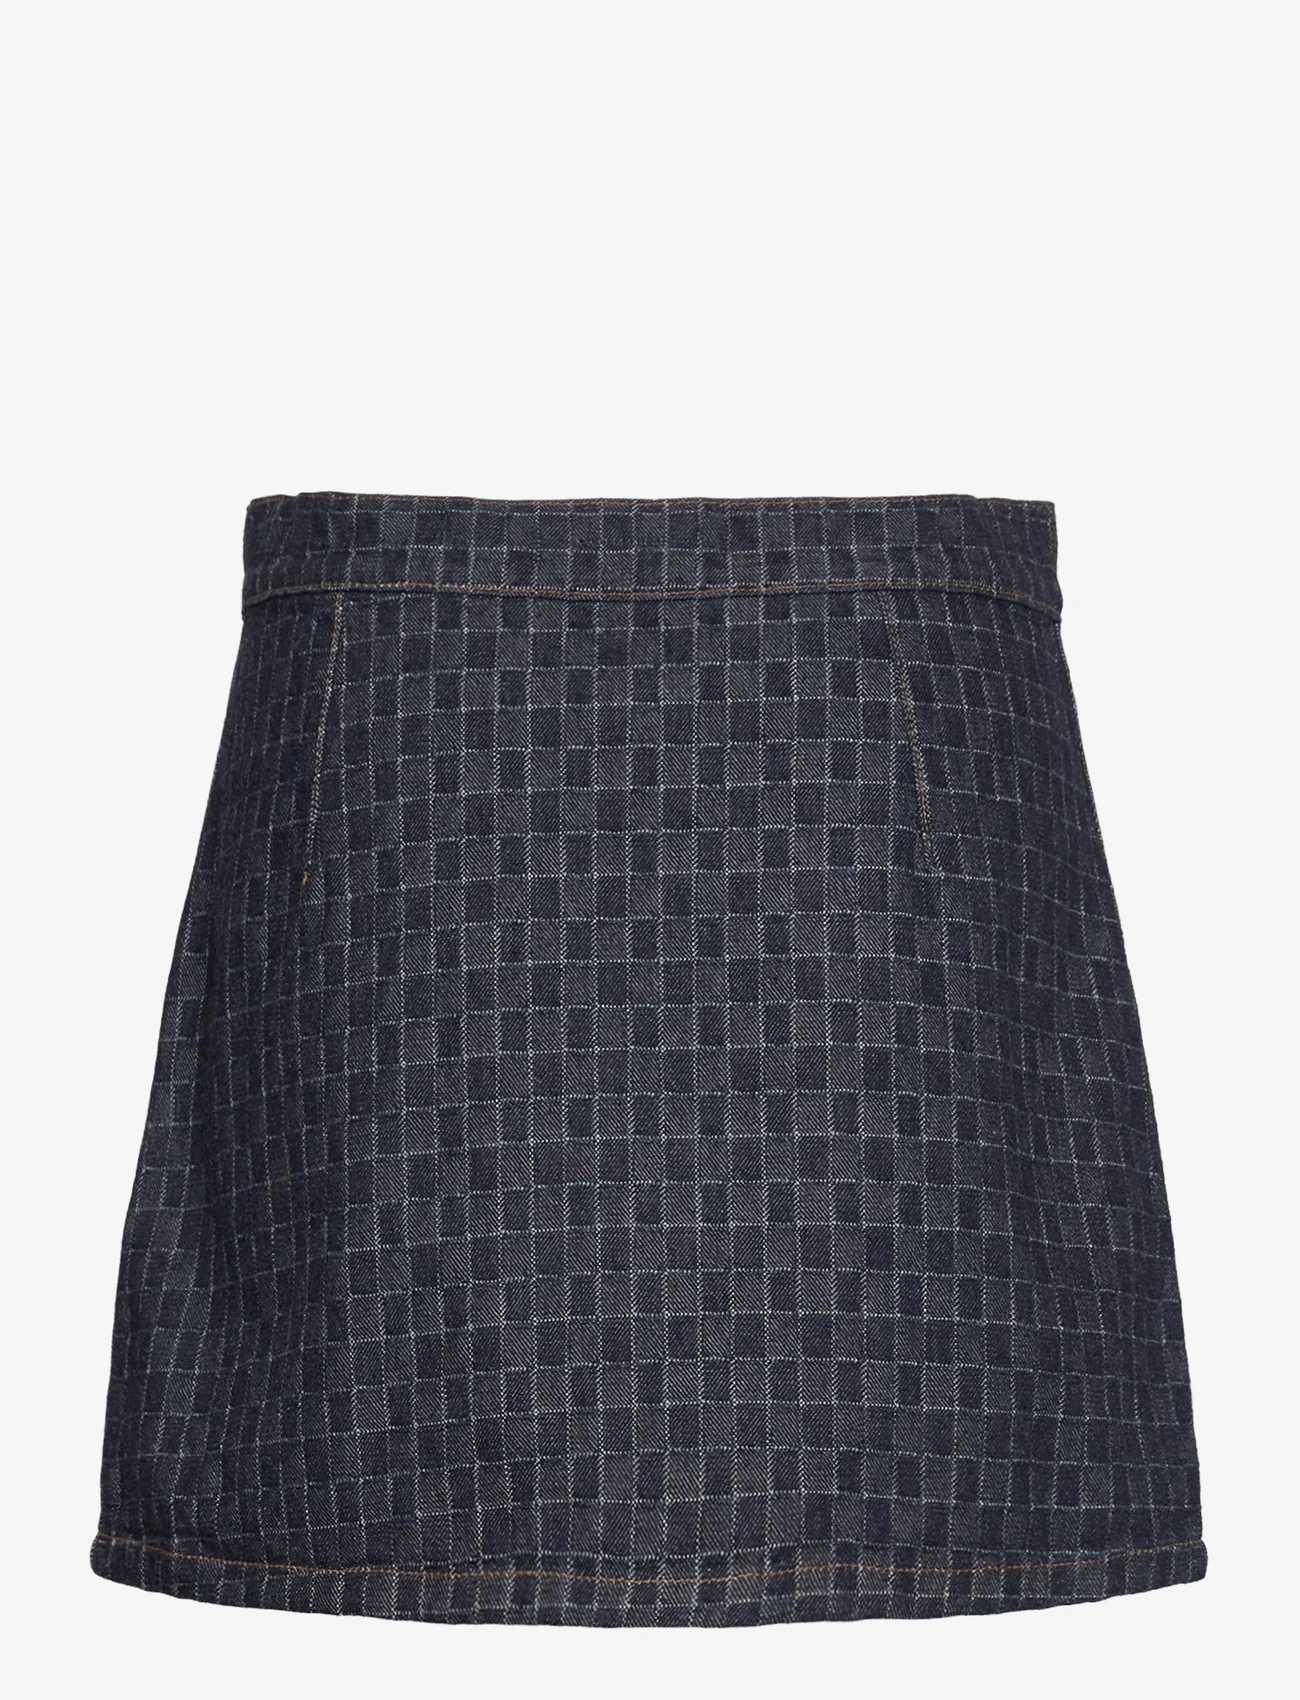 Hope - Brick Skirt Textured Indigo - spódnice mini - textured indigo - 1